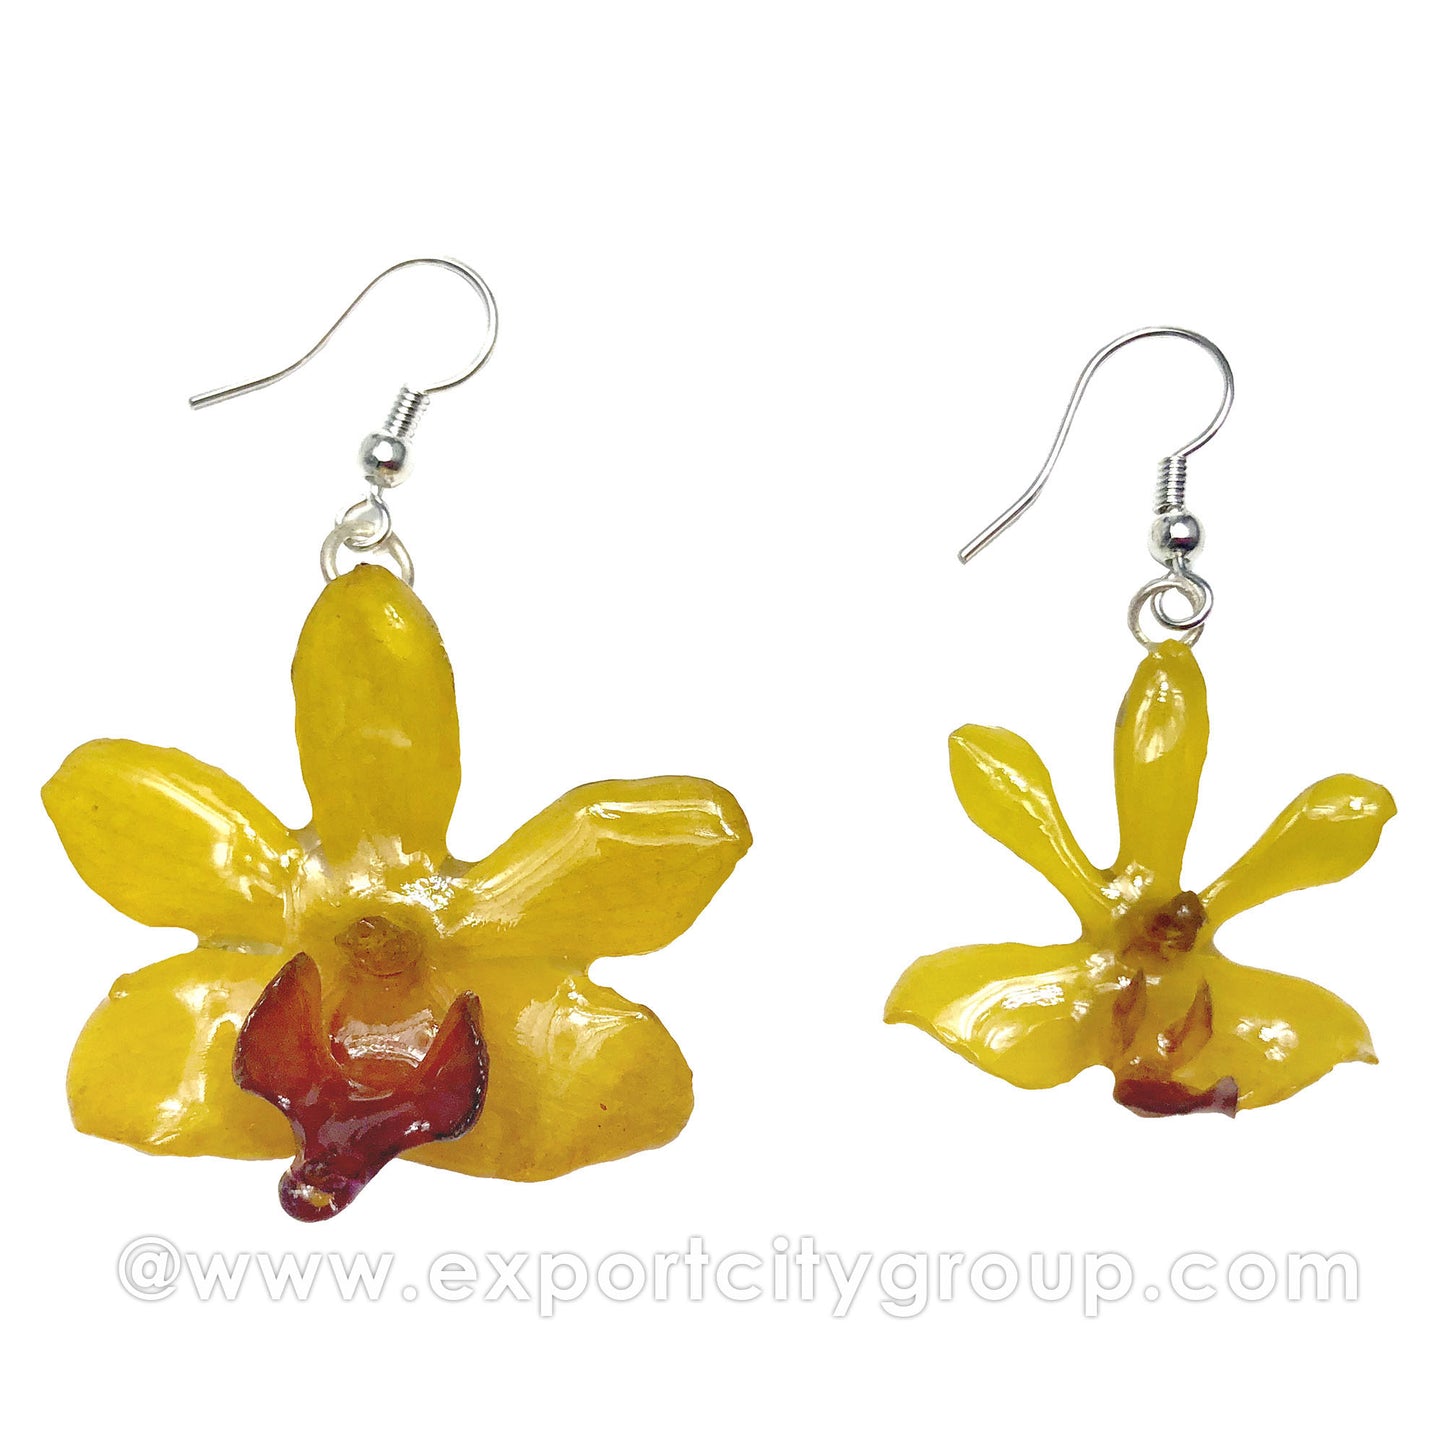 Doritis MEDIUM "Phalaenopsis" Orchid Jewelry Earring (Yellow)